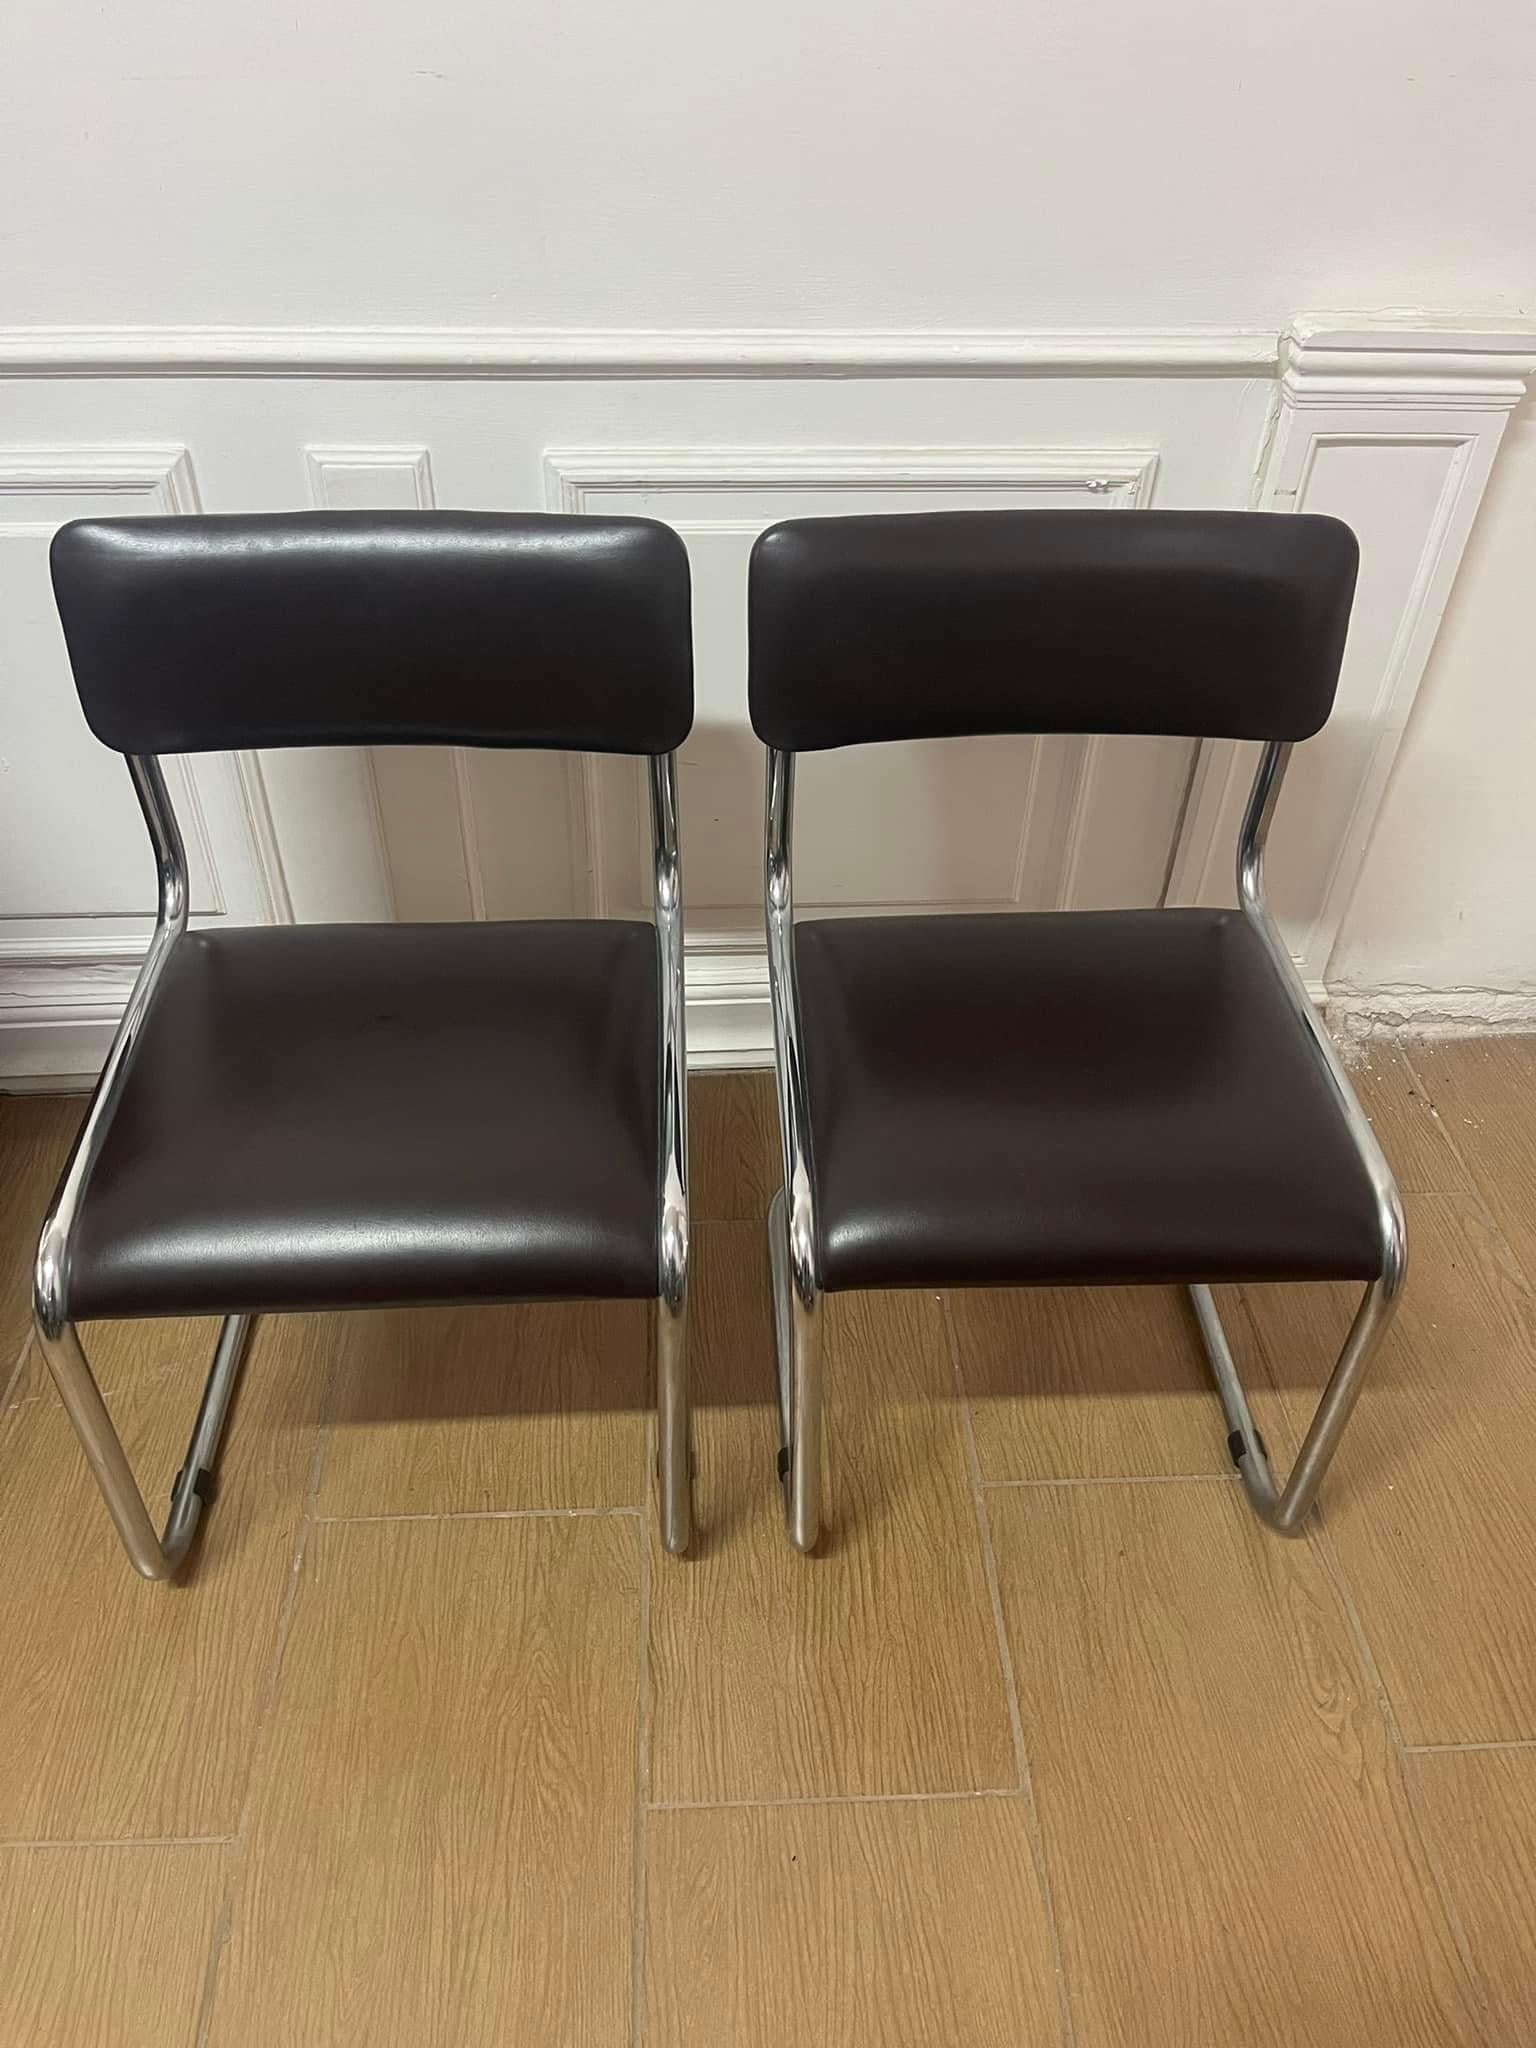 Pair Bauhaus Chairs 1970s.
Chair height 78 cm seat height 45 cm width 45 cm depth 44 cm